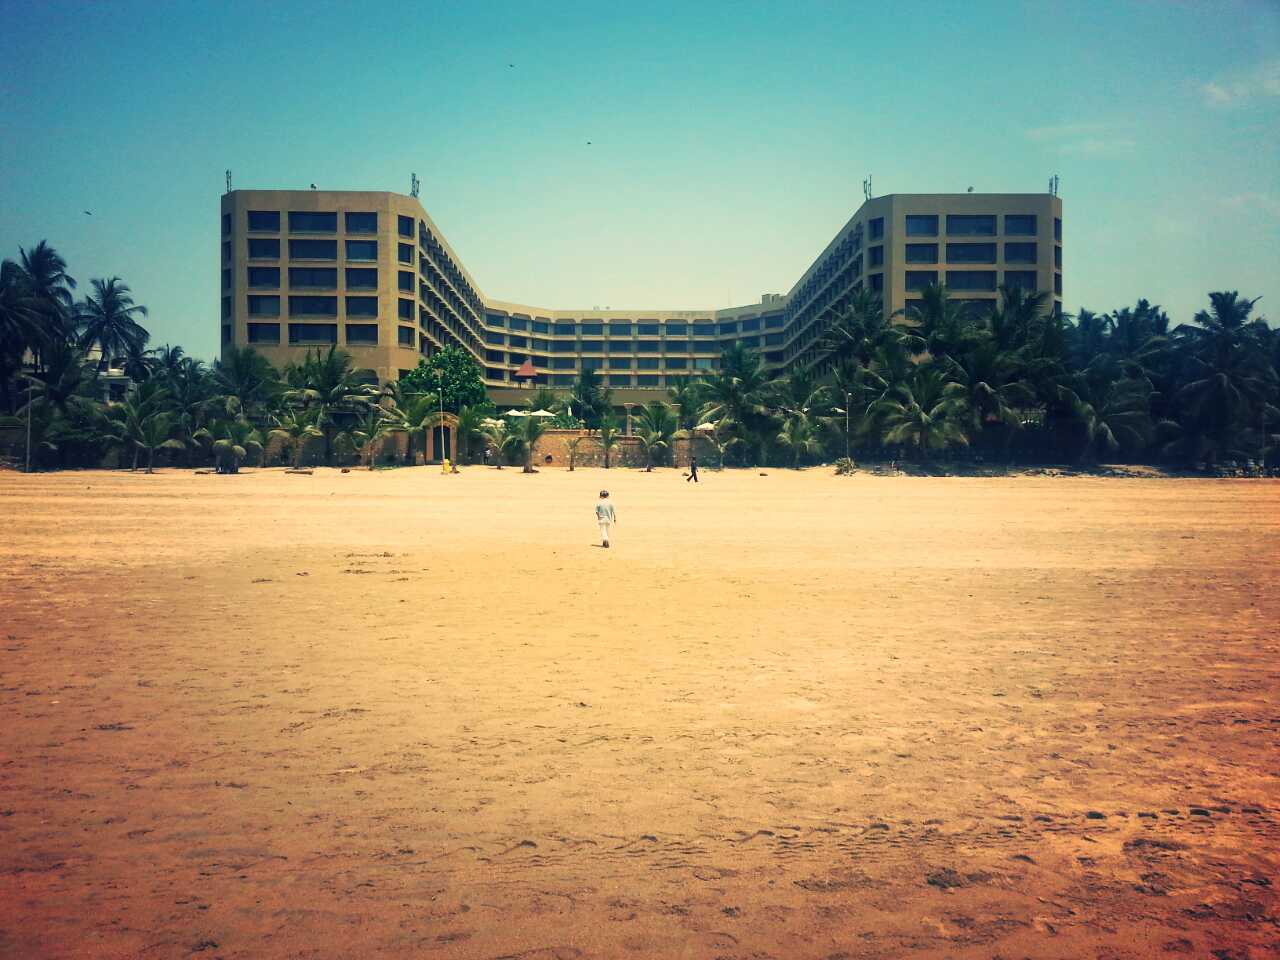 The hotel and the beach in Mumbai